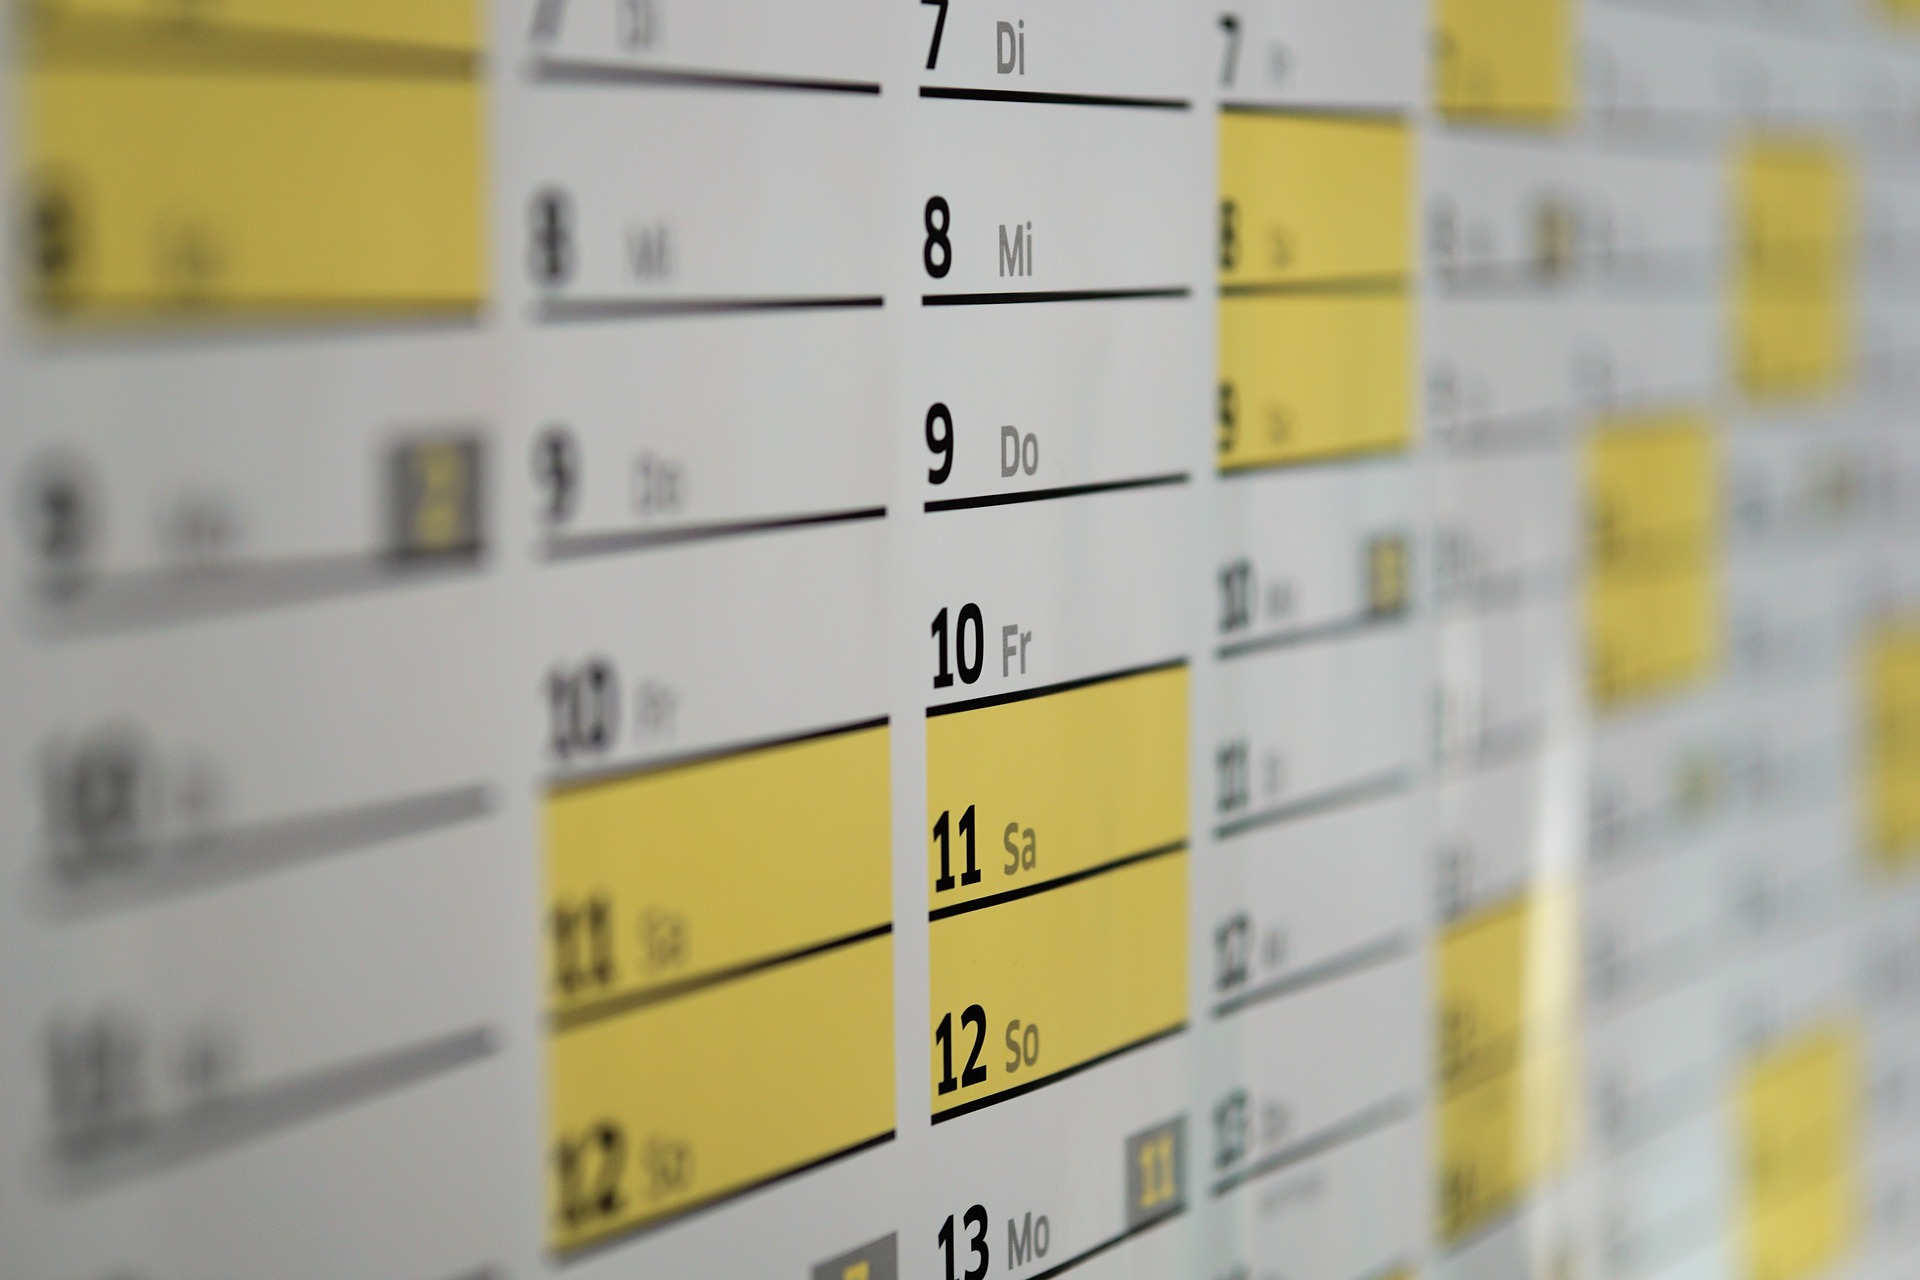 A calendar showing various dates